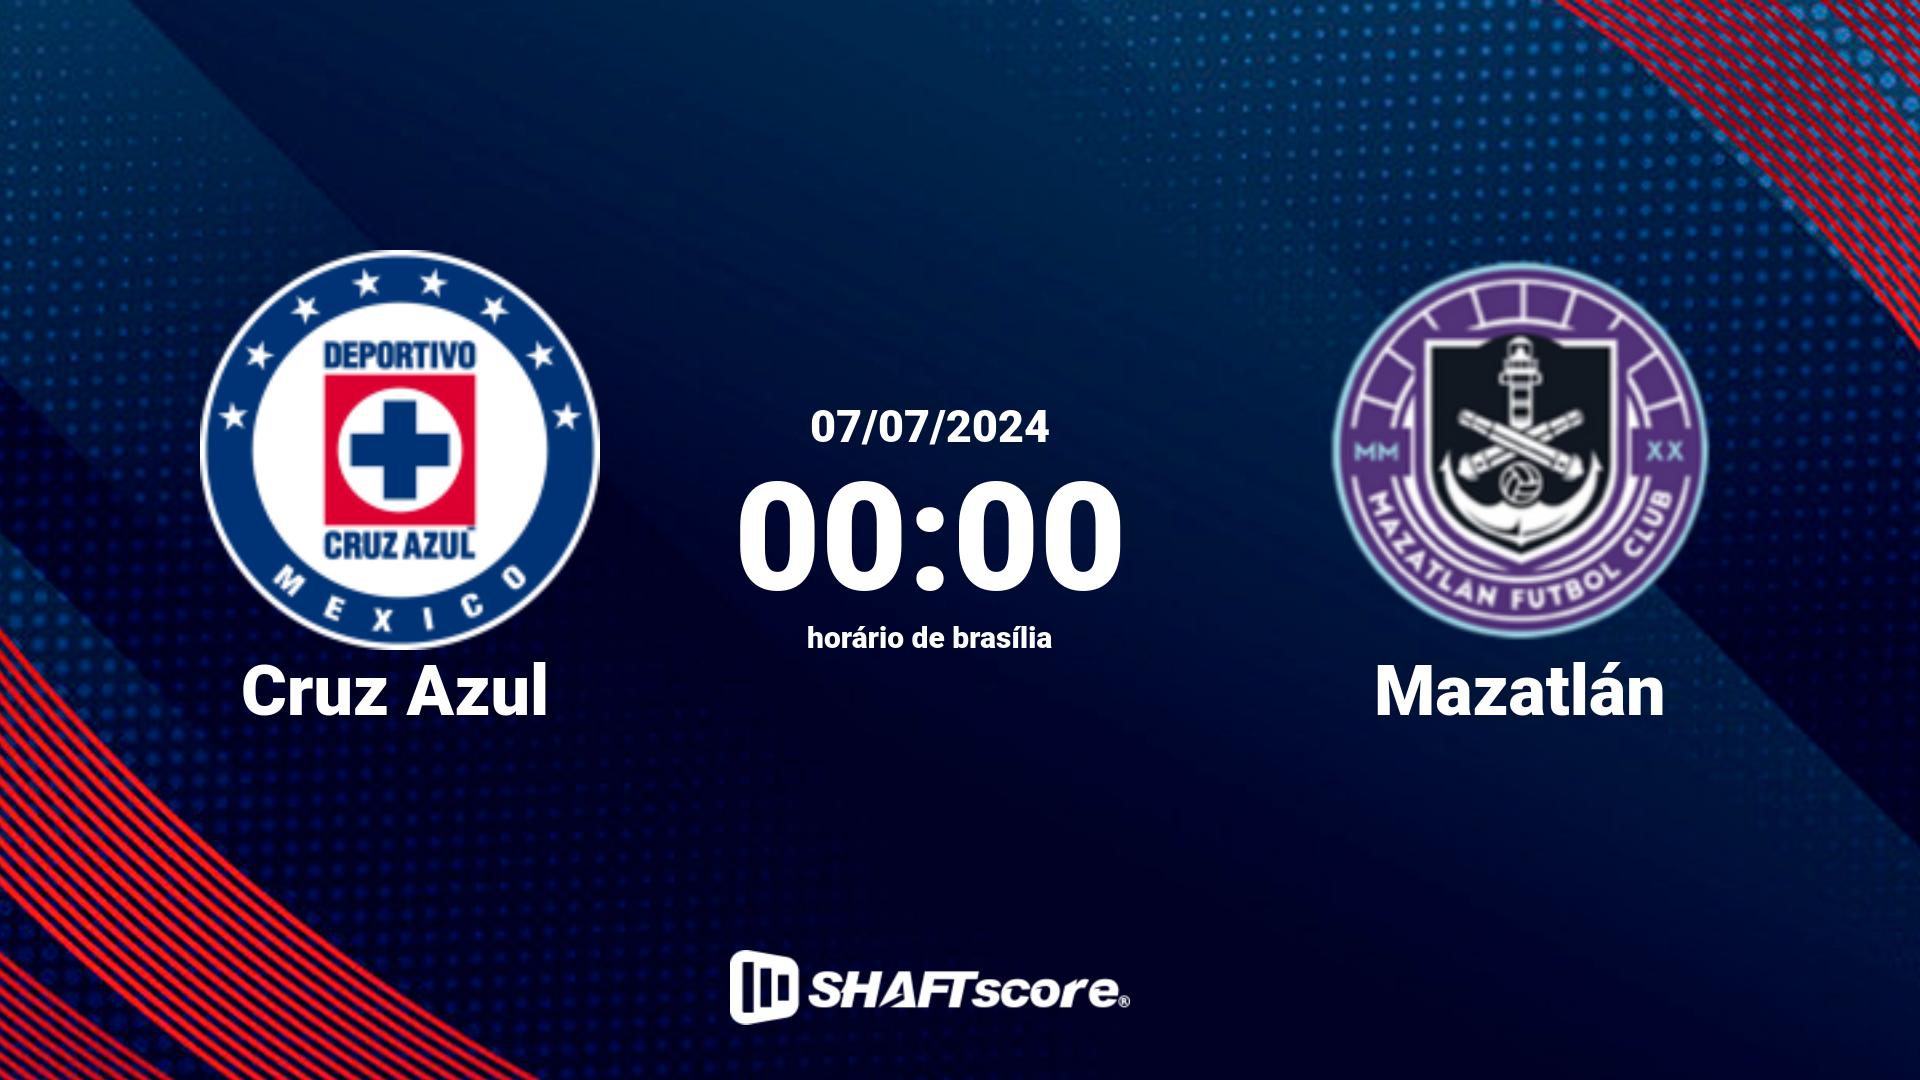 Estatísticas do jogo Cruz Azul vs Mazatlán 07.07 00:00